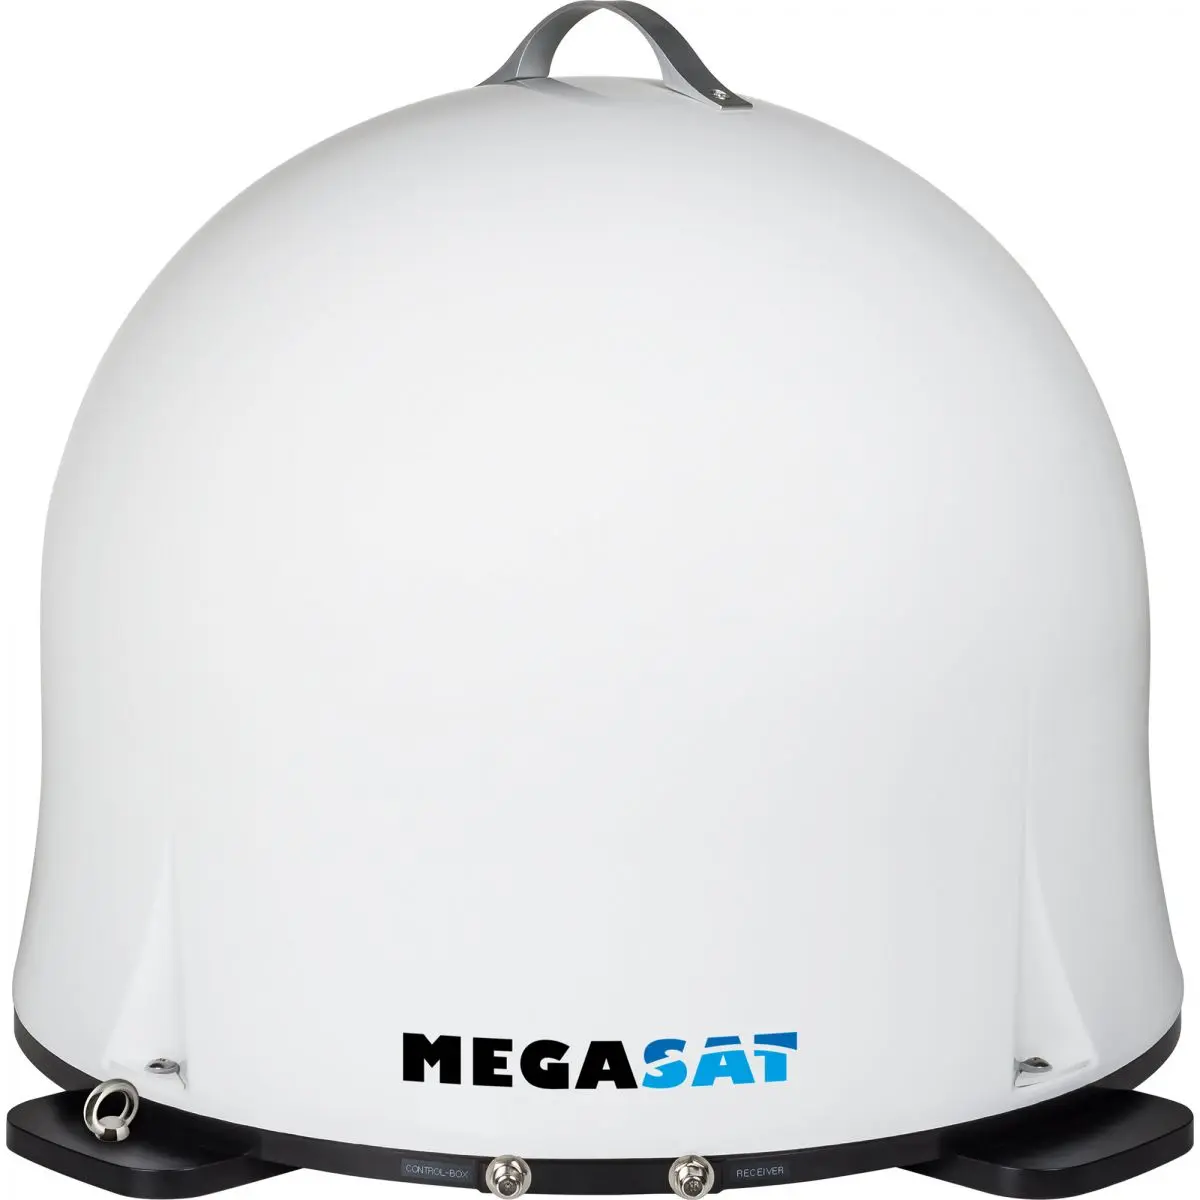 Megasat Campingman Portable 3 műholdrendszer